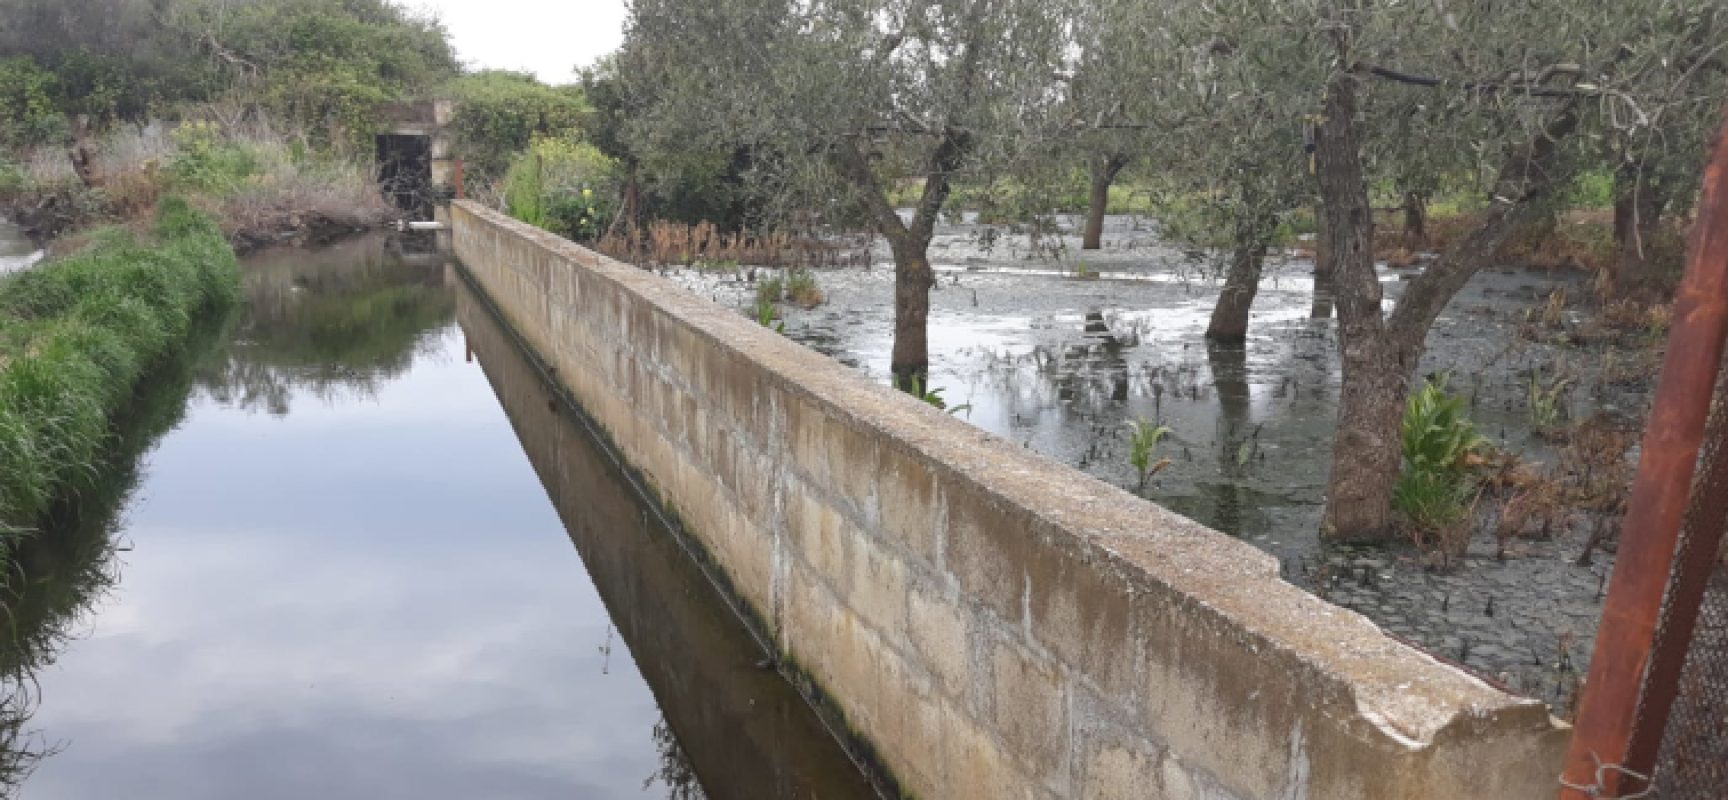 M5s Bisceglie: “Segnalato sversamento acque reflue in Carrara Lama di Macina” / FOTO